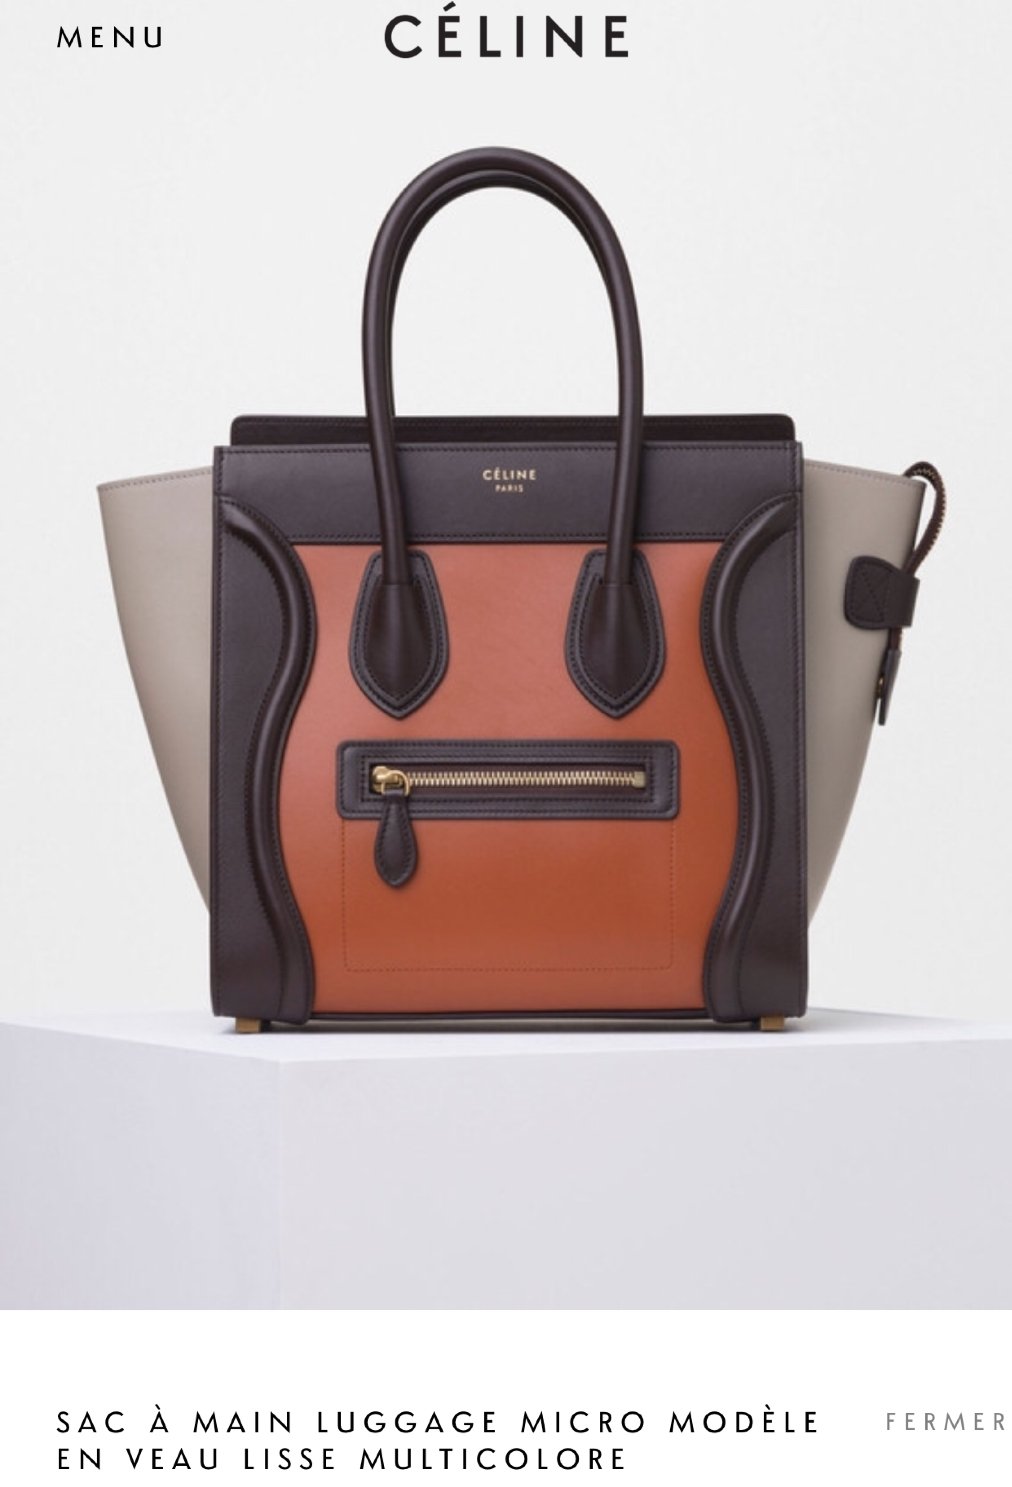 celine trio bag buy online, celine micro luggage bag price